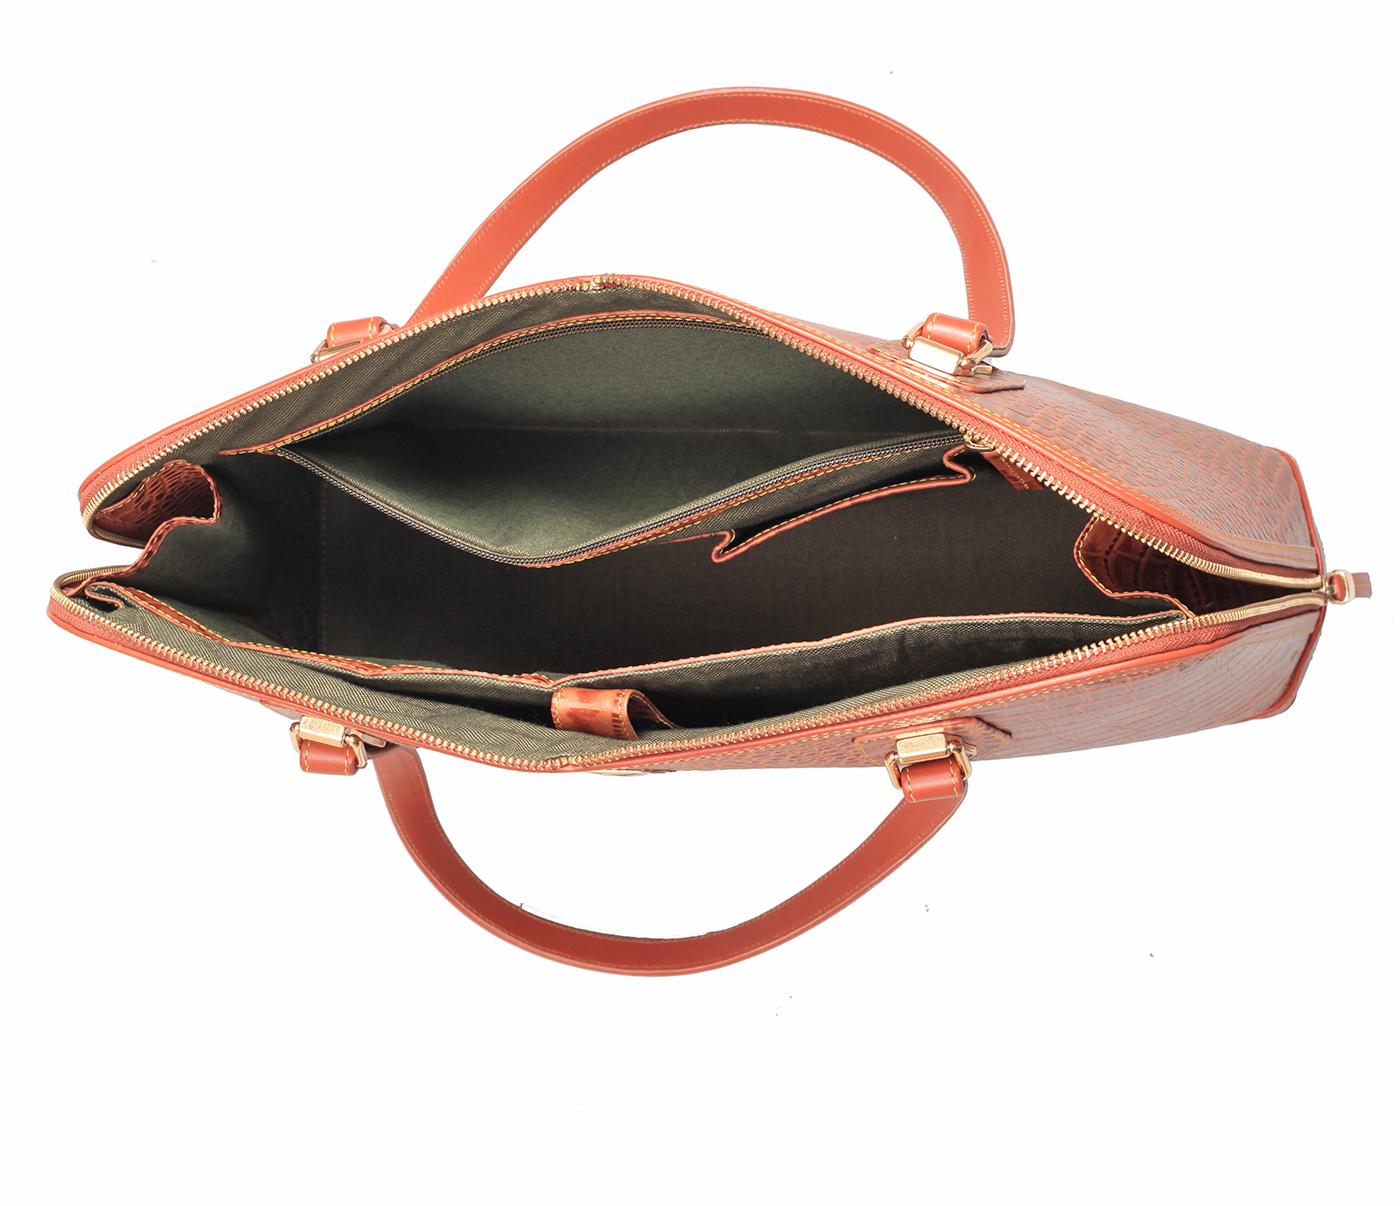 B858-Estrella-Shoulder Work Bag in Genuine Leather - Tan